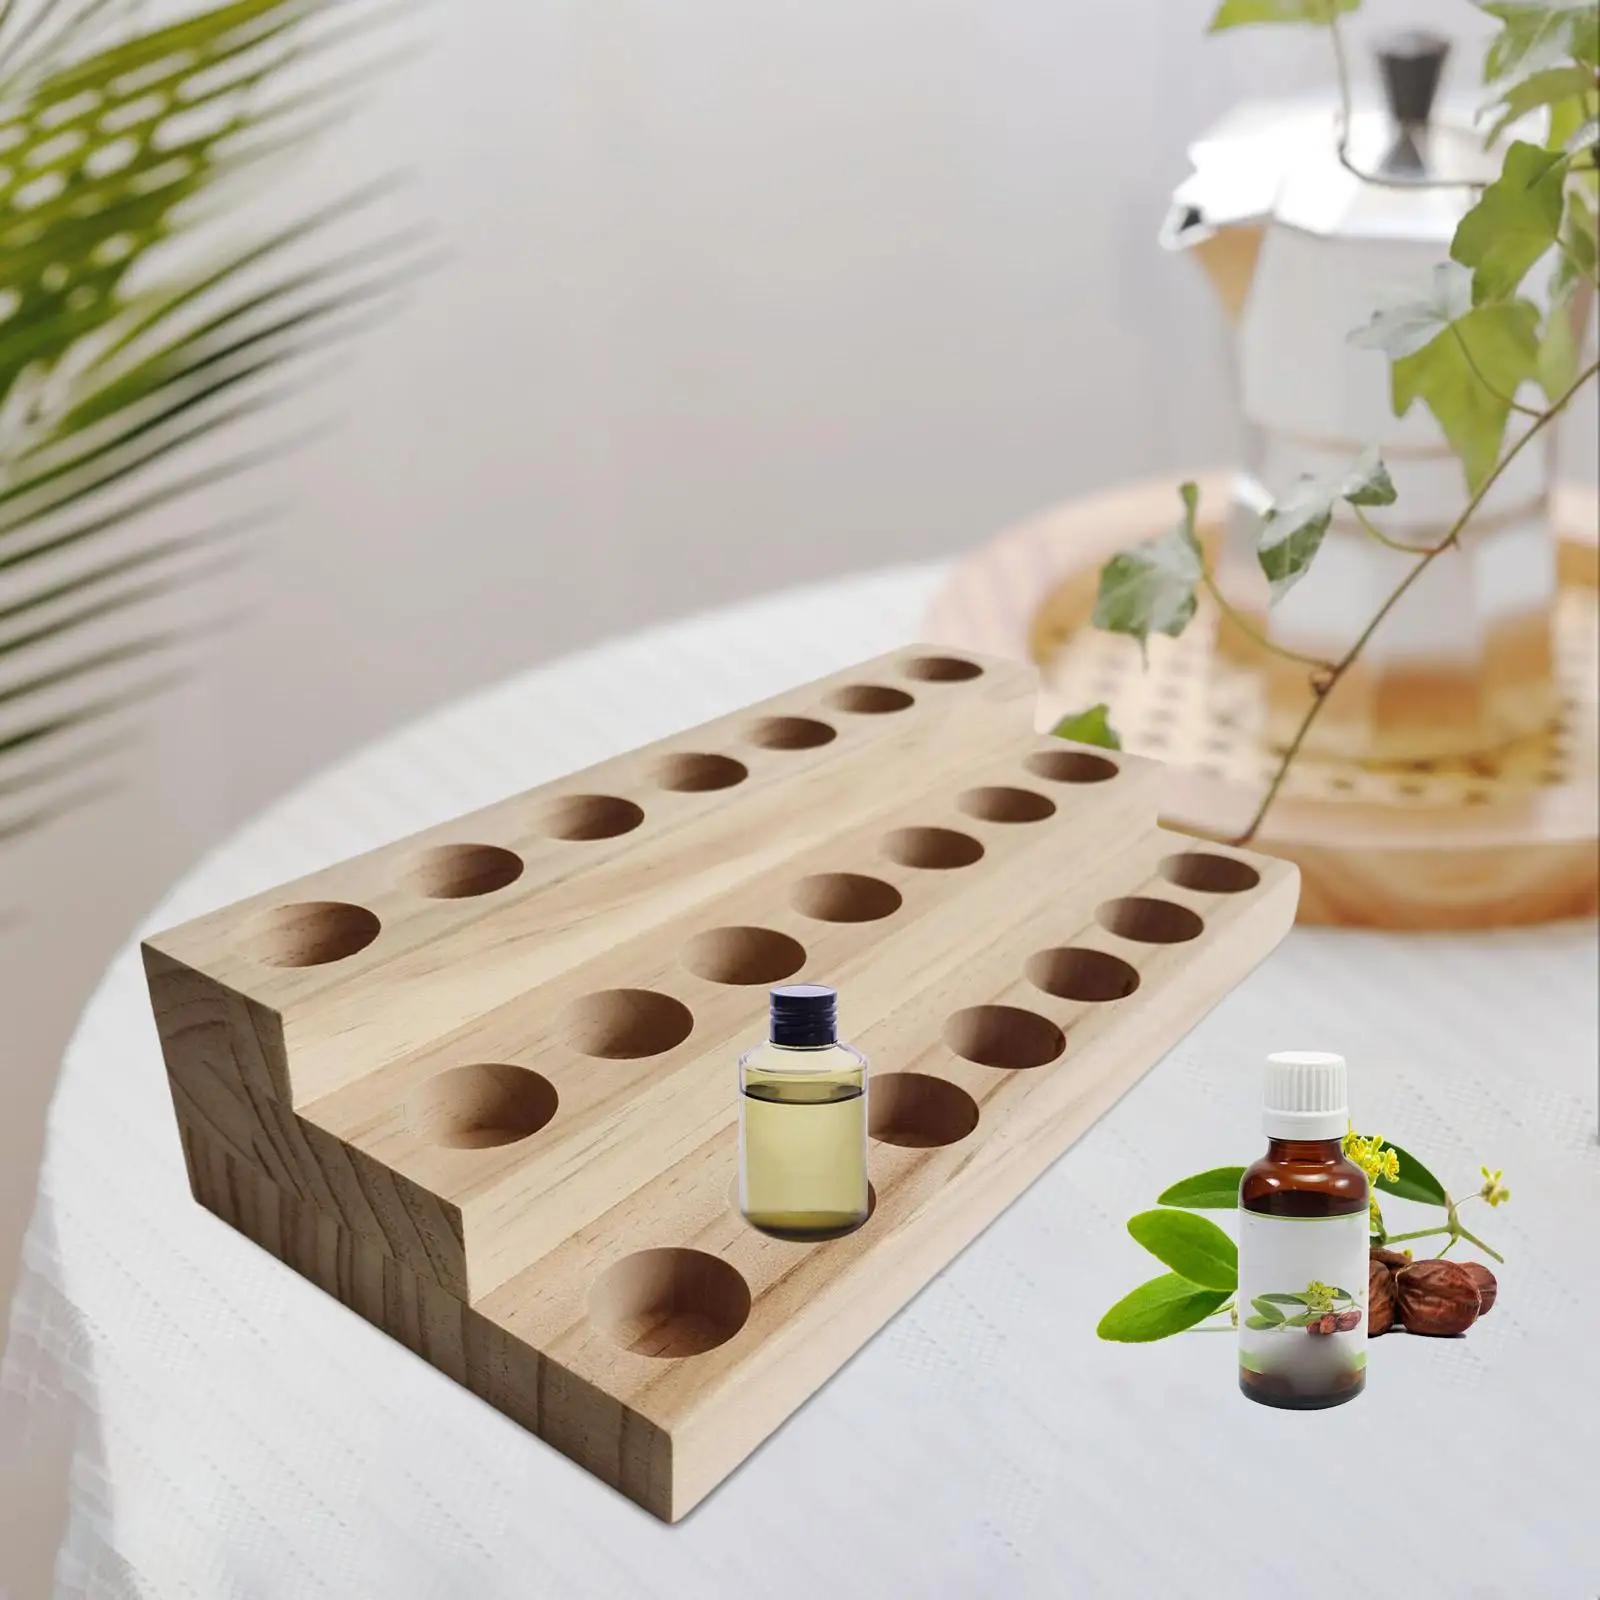 Wooden Essential Oil Storage Rack 3 Tiers Makeup Shelf for 10ml Bottles Home